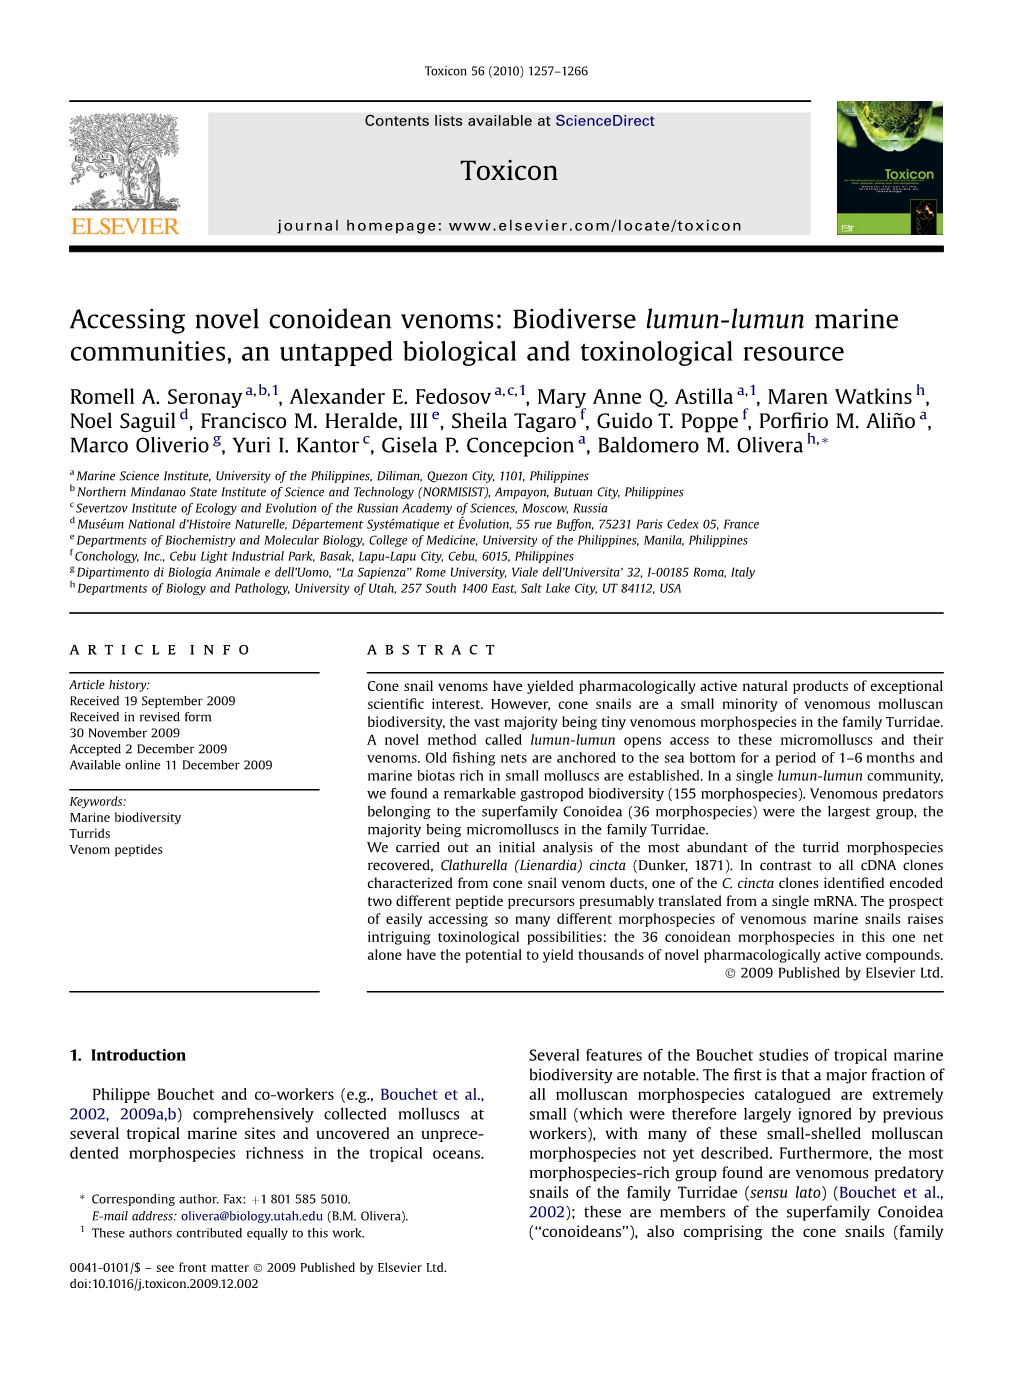 Accessing Novel Conoidean Venoms: Biodiverse Lumun-Lumun Marine Communities, an Untapped Biological and Toxinological Resource